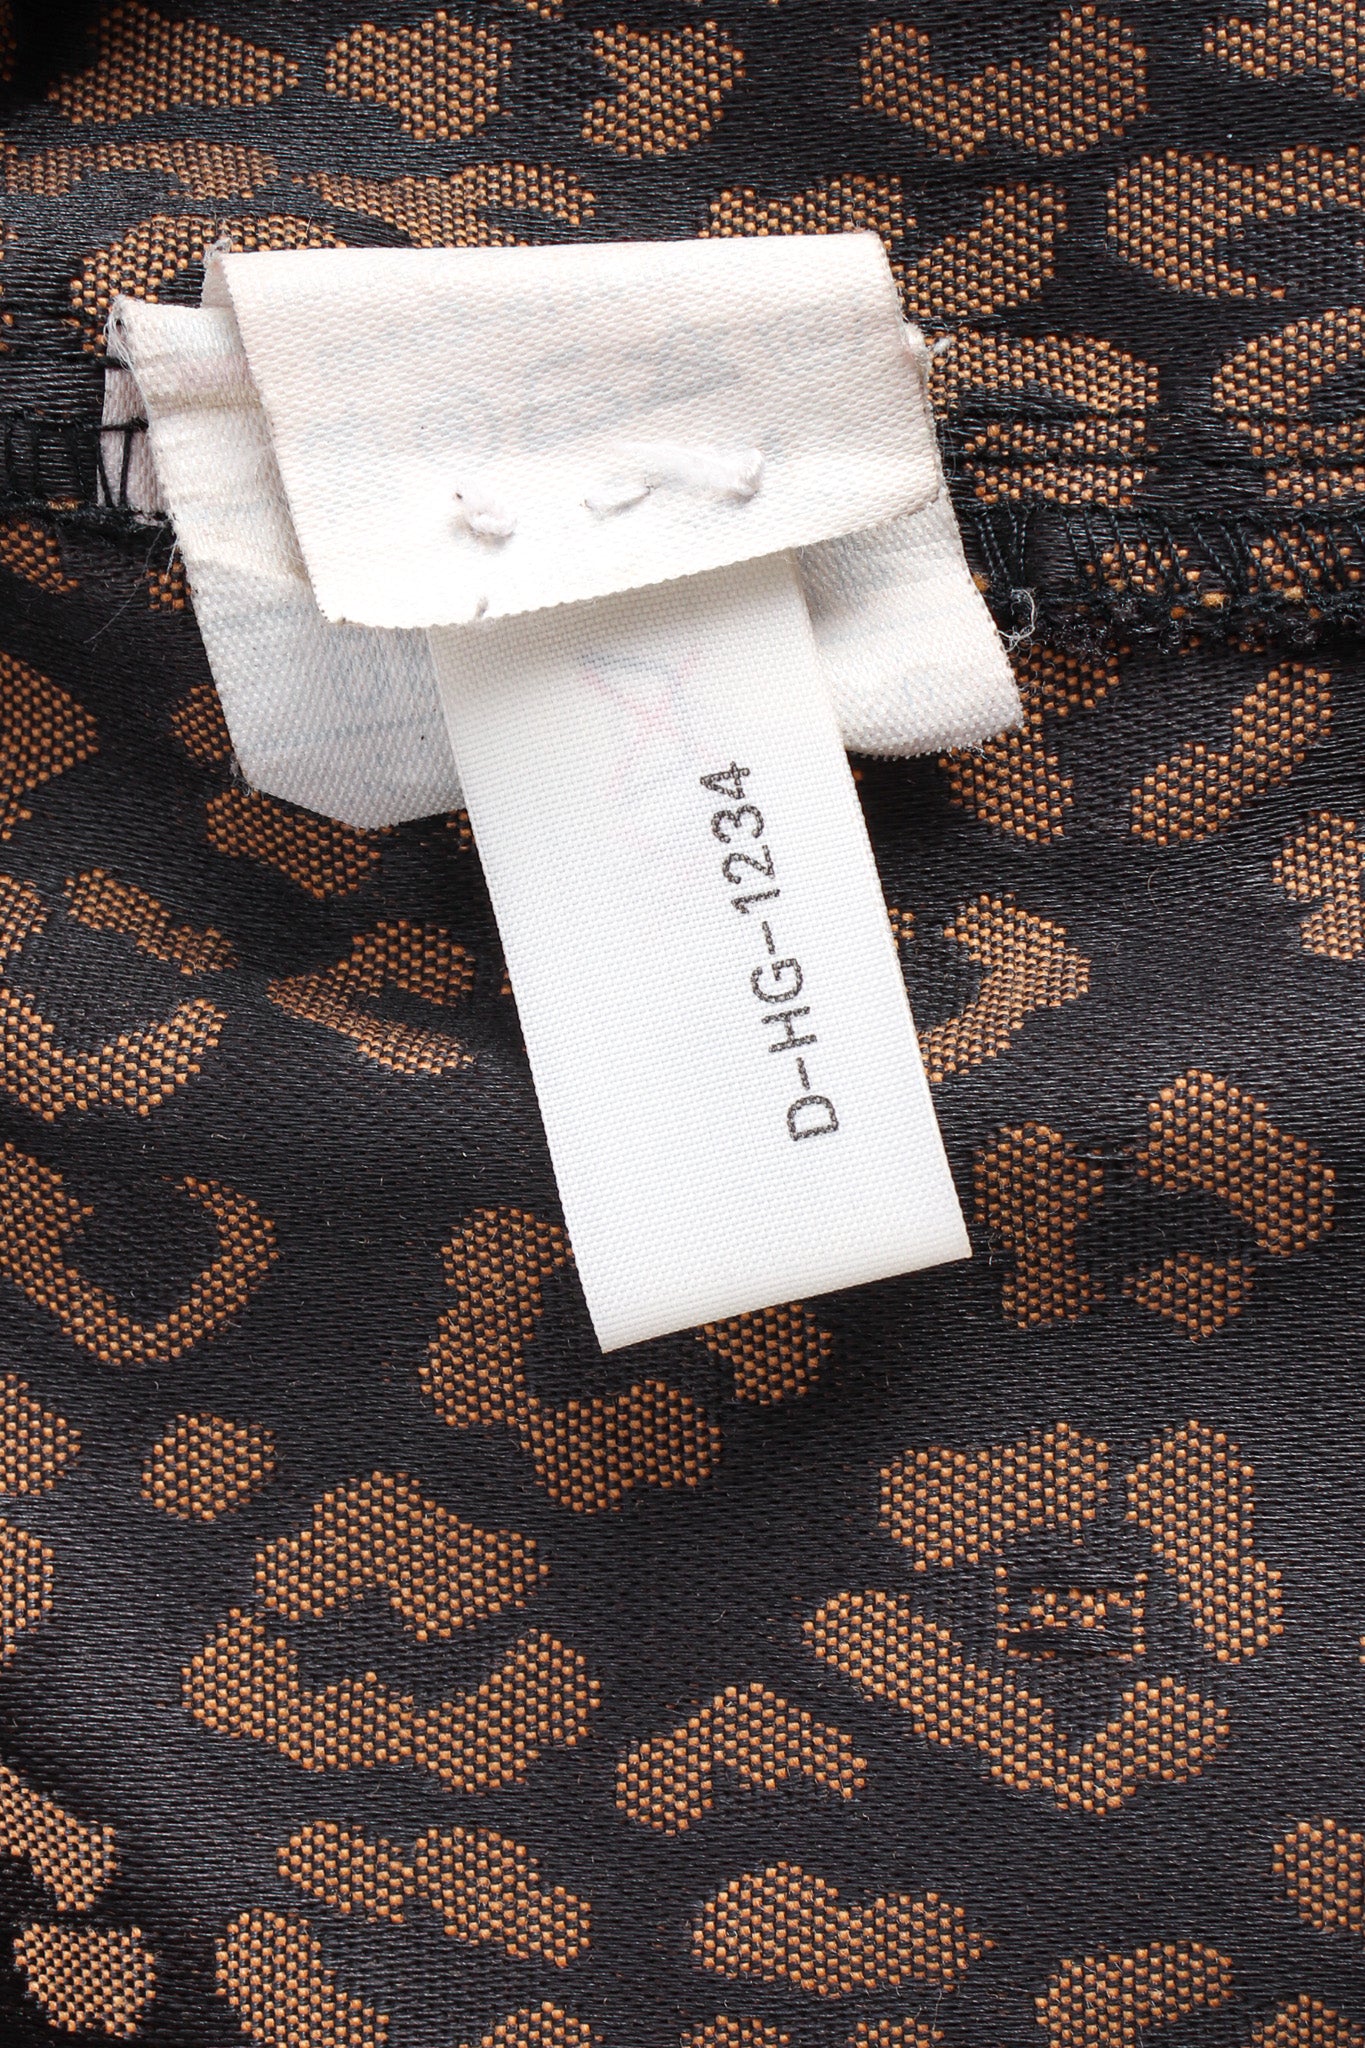 Vintage Fendi Leopard Signed Logo Print Jacket tag @ Recess LA